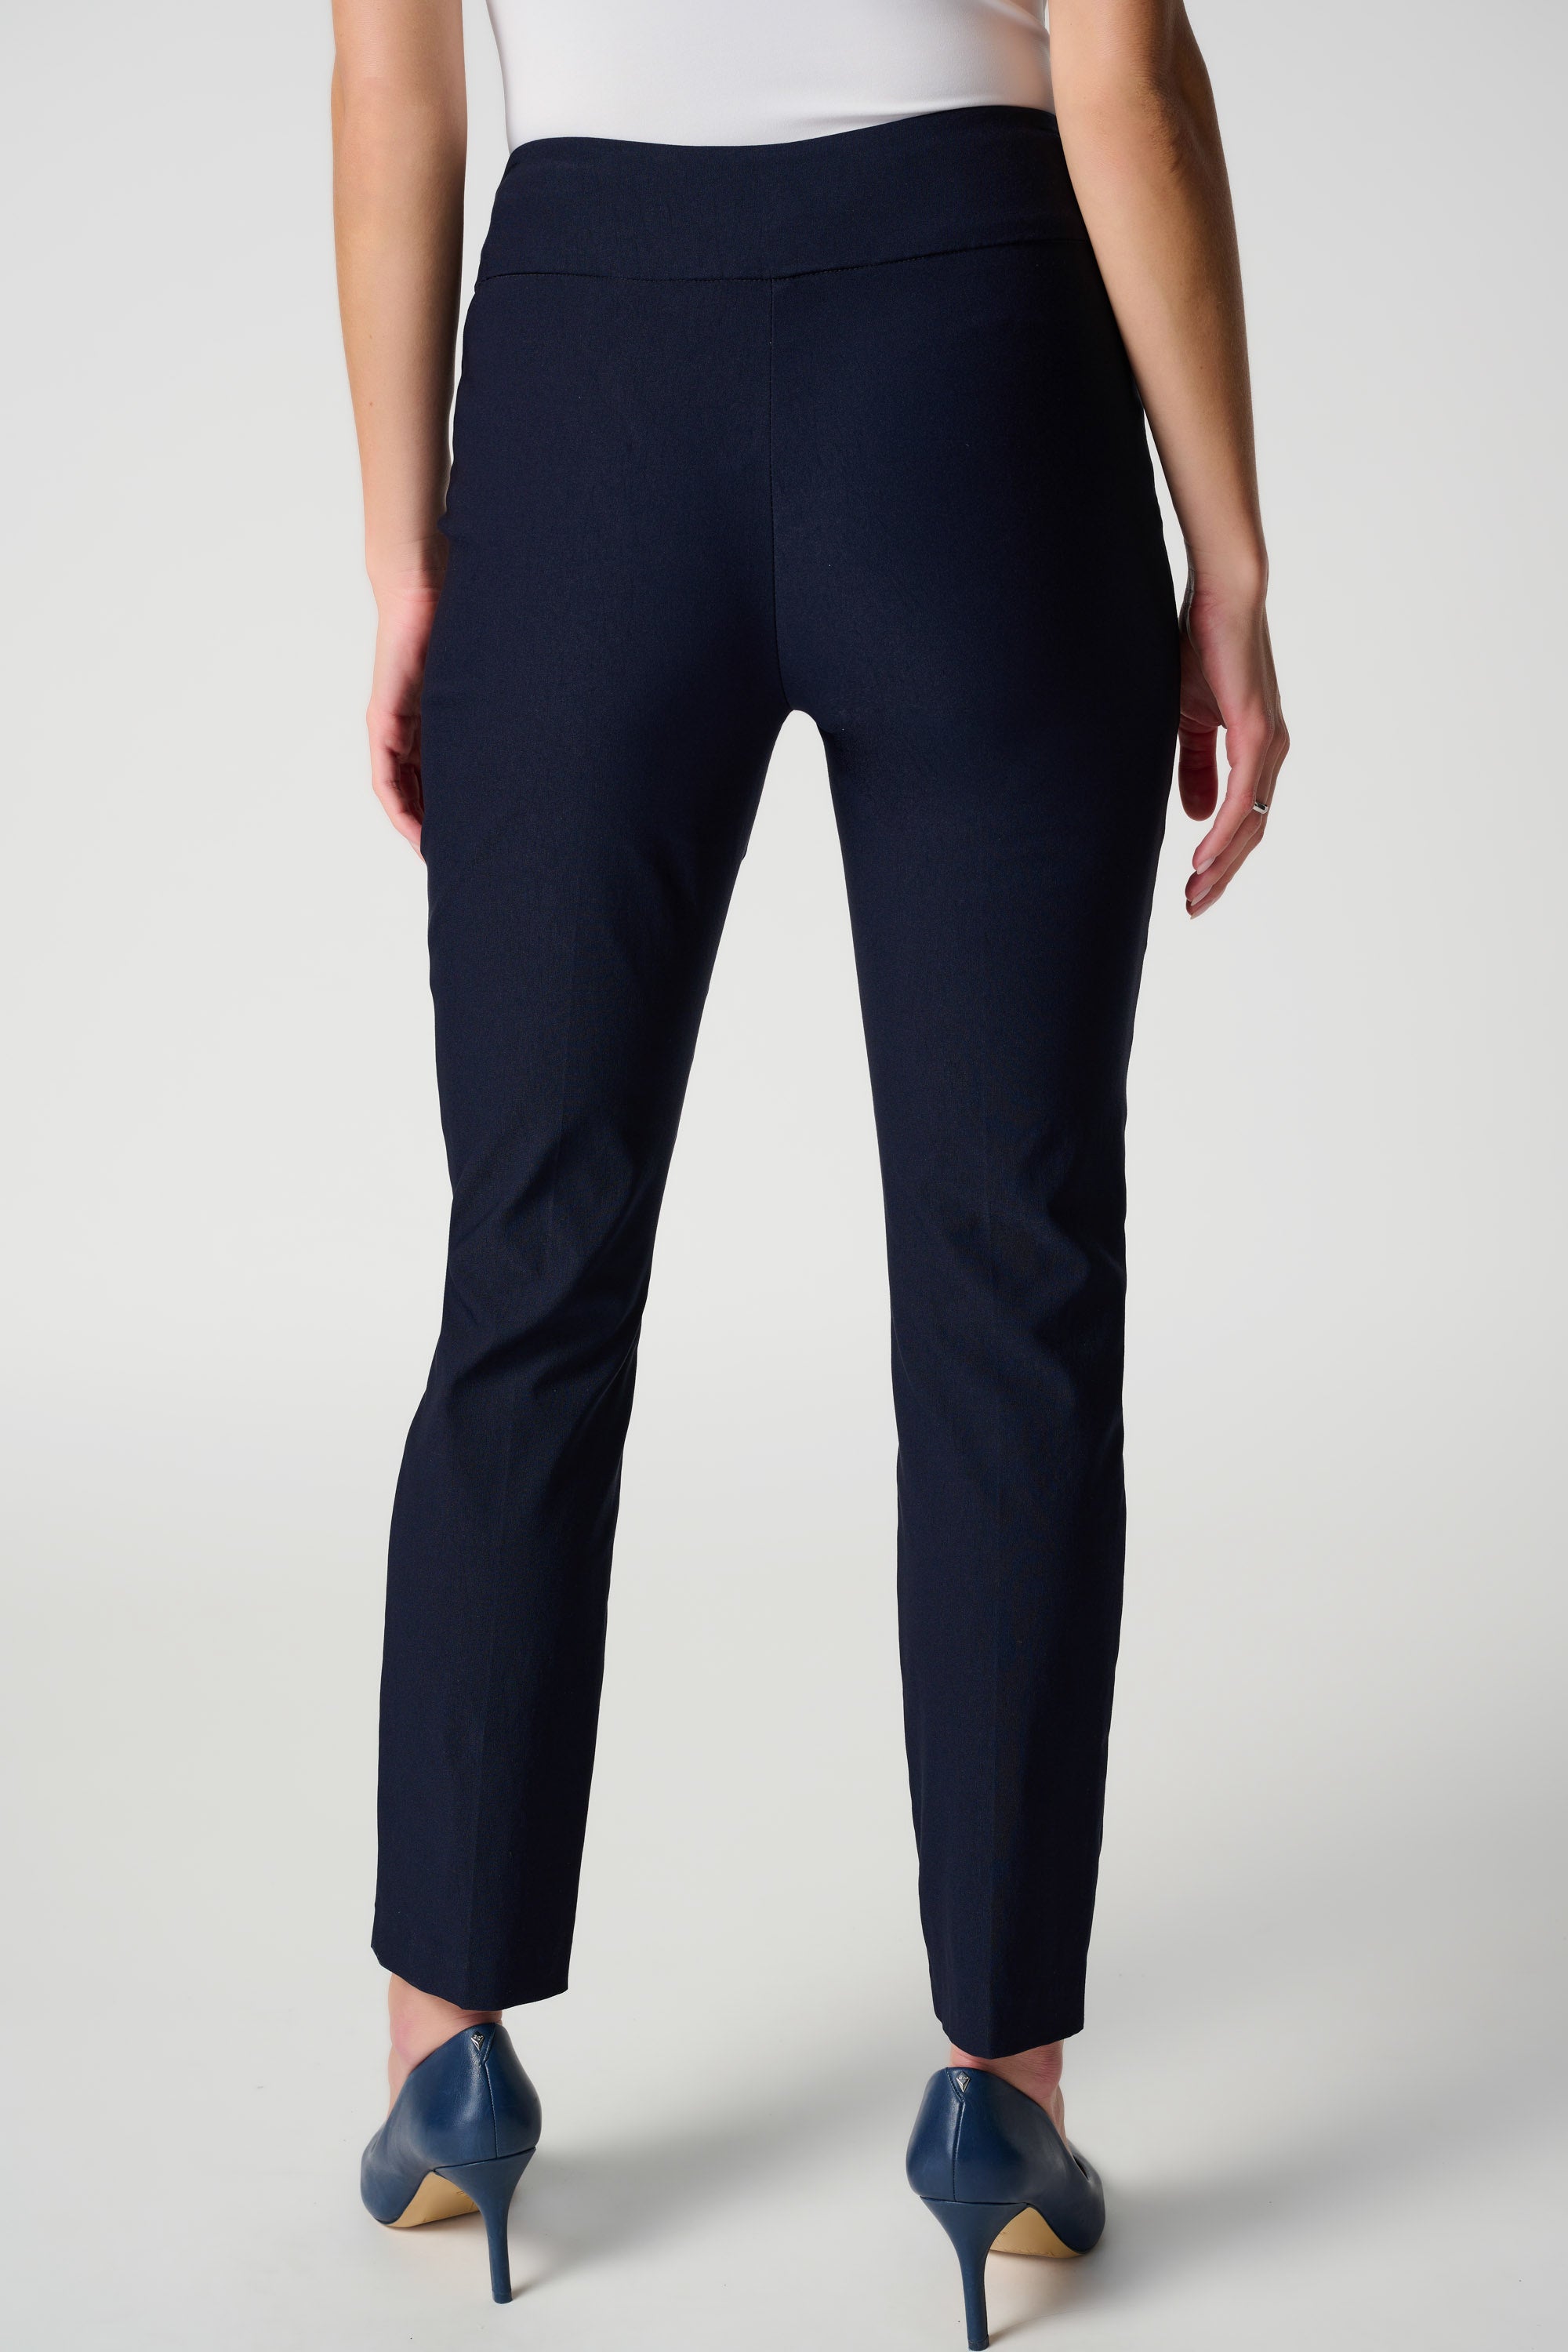 Joseph Ribkoff (201483NOS) Women's Classic Pull On Slim Pants in Midnight Blue